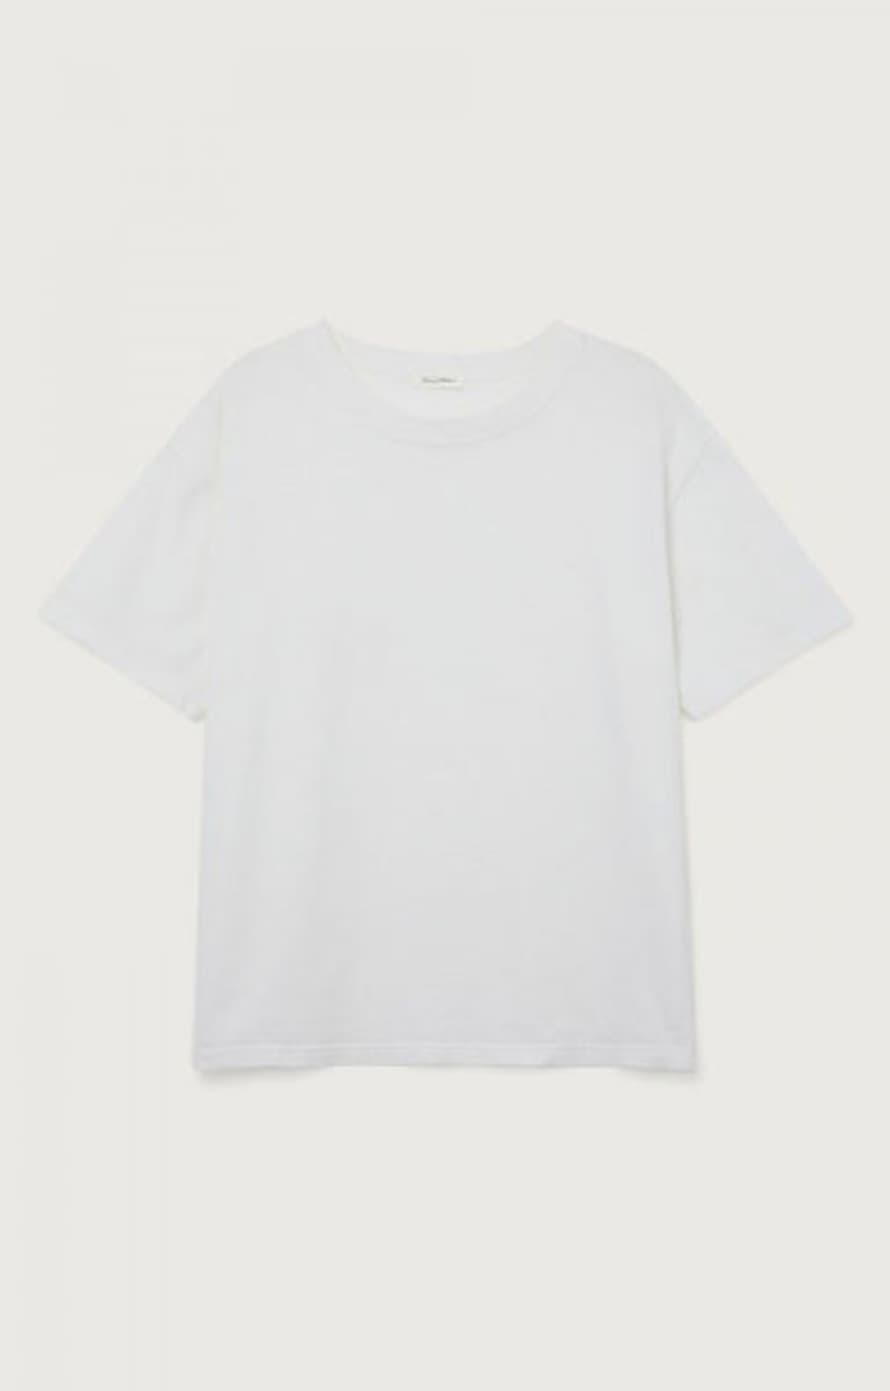 American Vintage Fizvalley White T-shirt